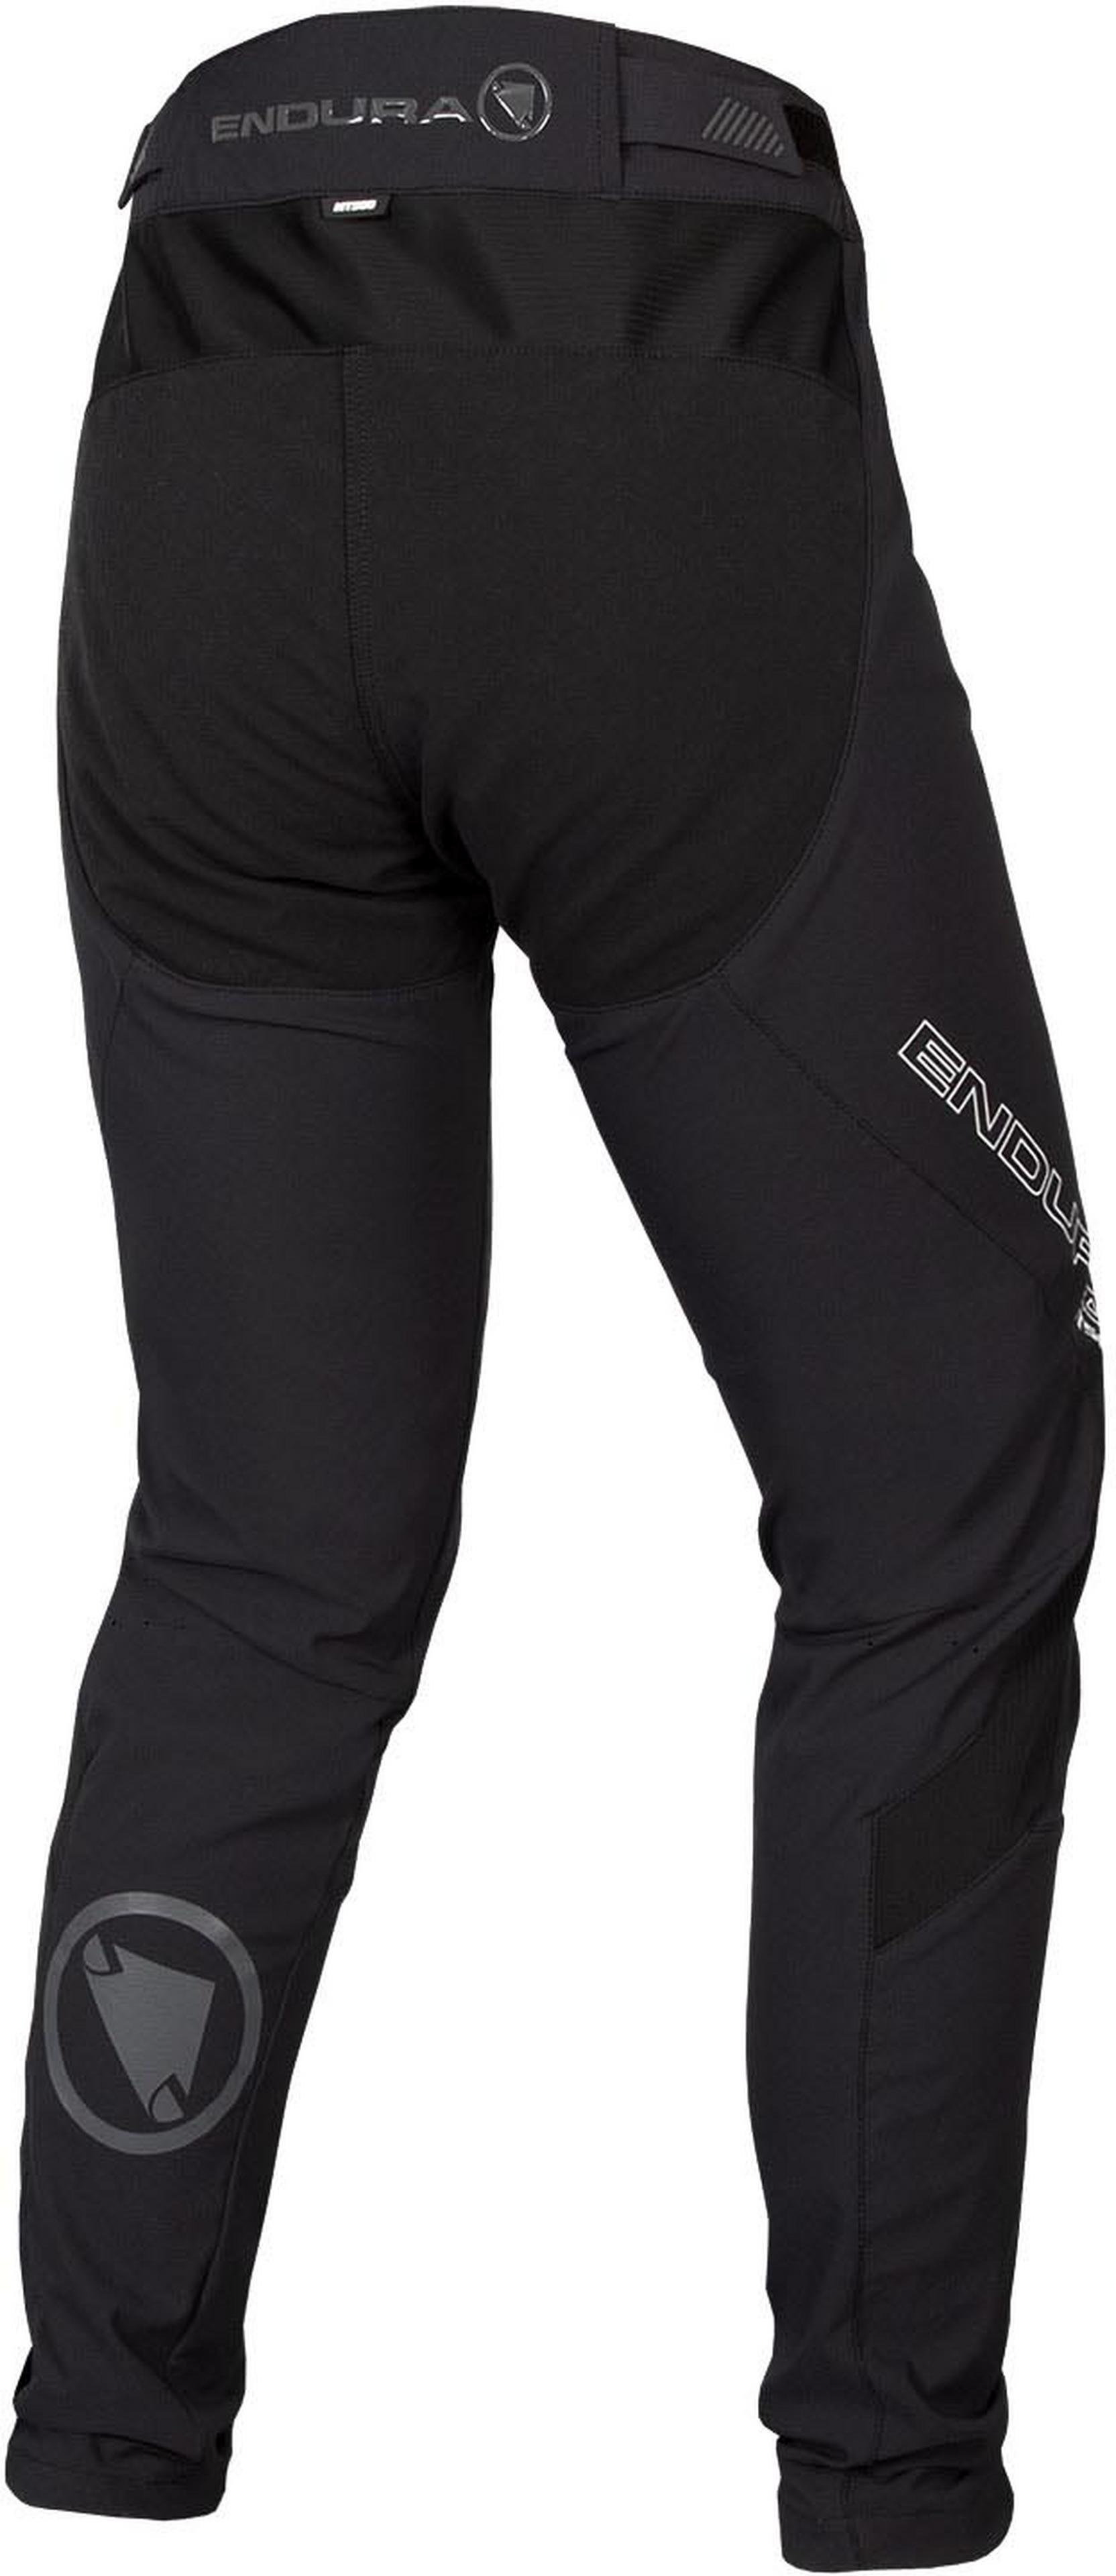 Women's MT500 Burner Pant - Black